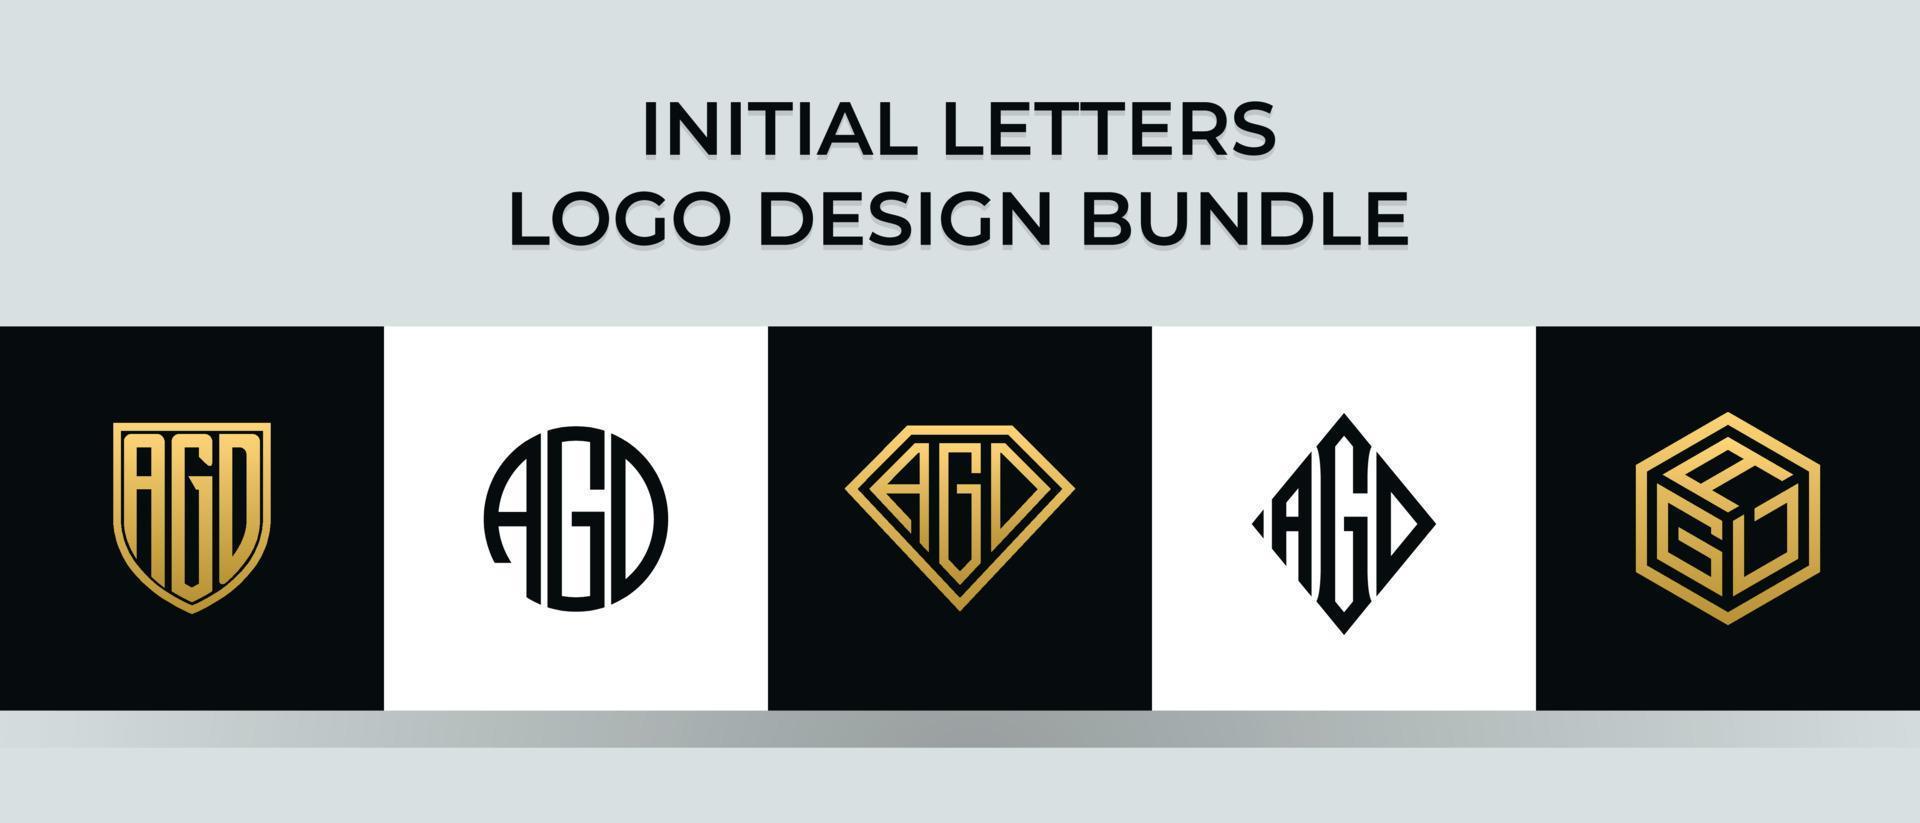 lettere iniziali agd logo design bundle vettore